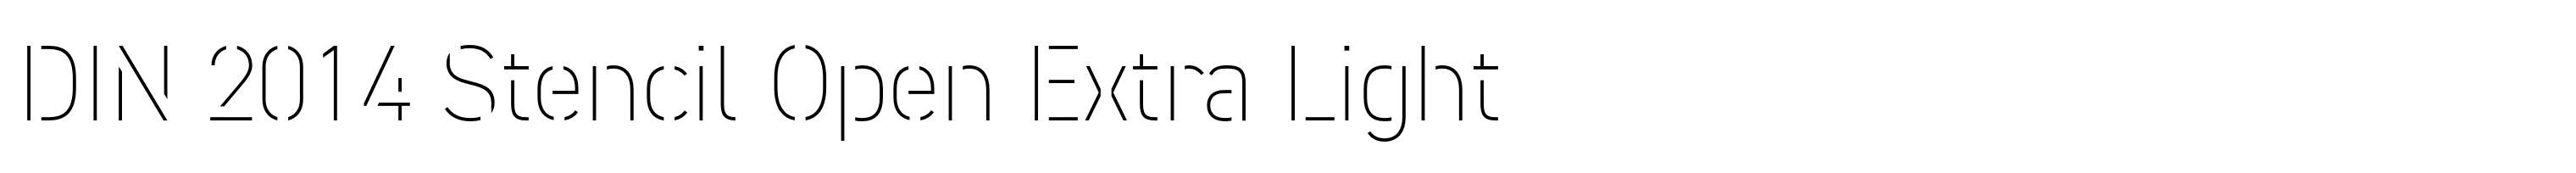 DIN 2014 Stencil Open Extra Light